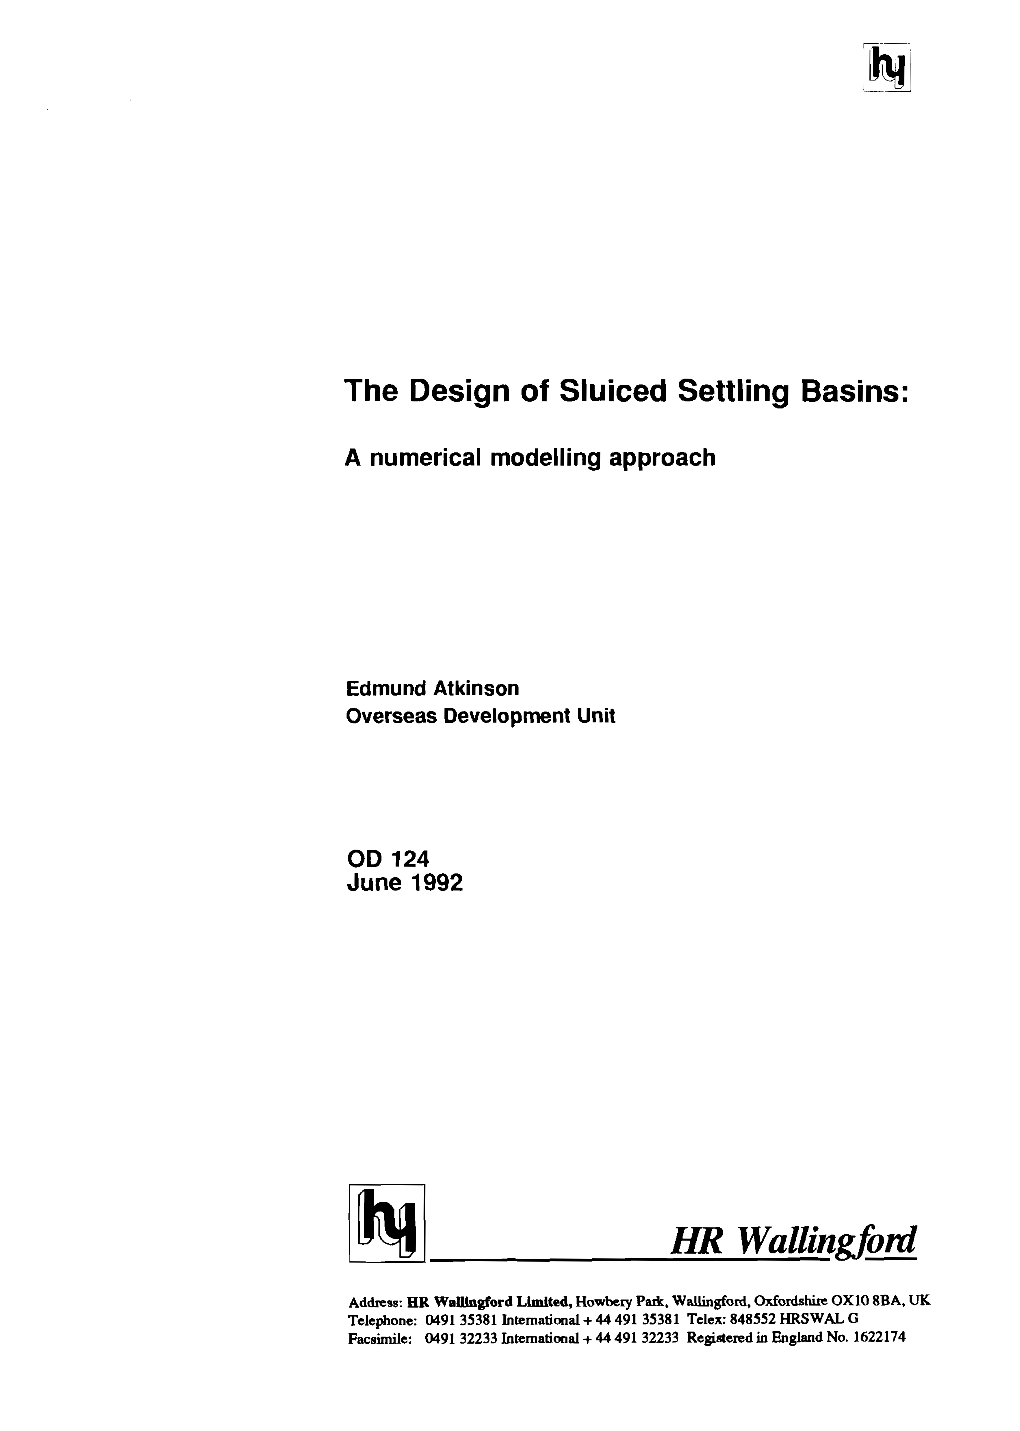 The Design of Sluiced Settling Basins